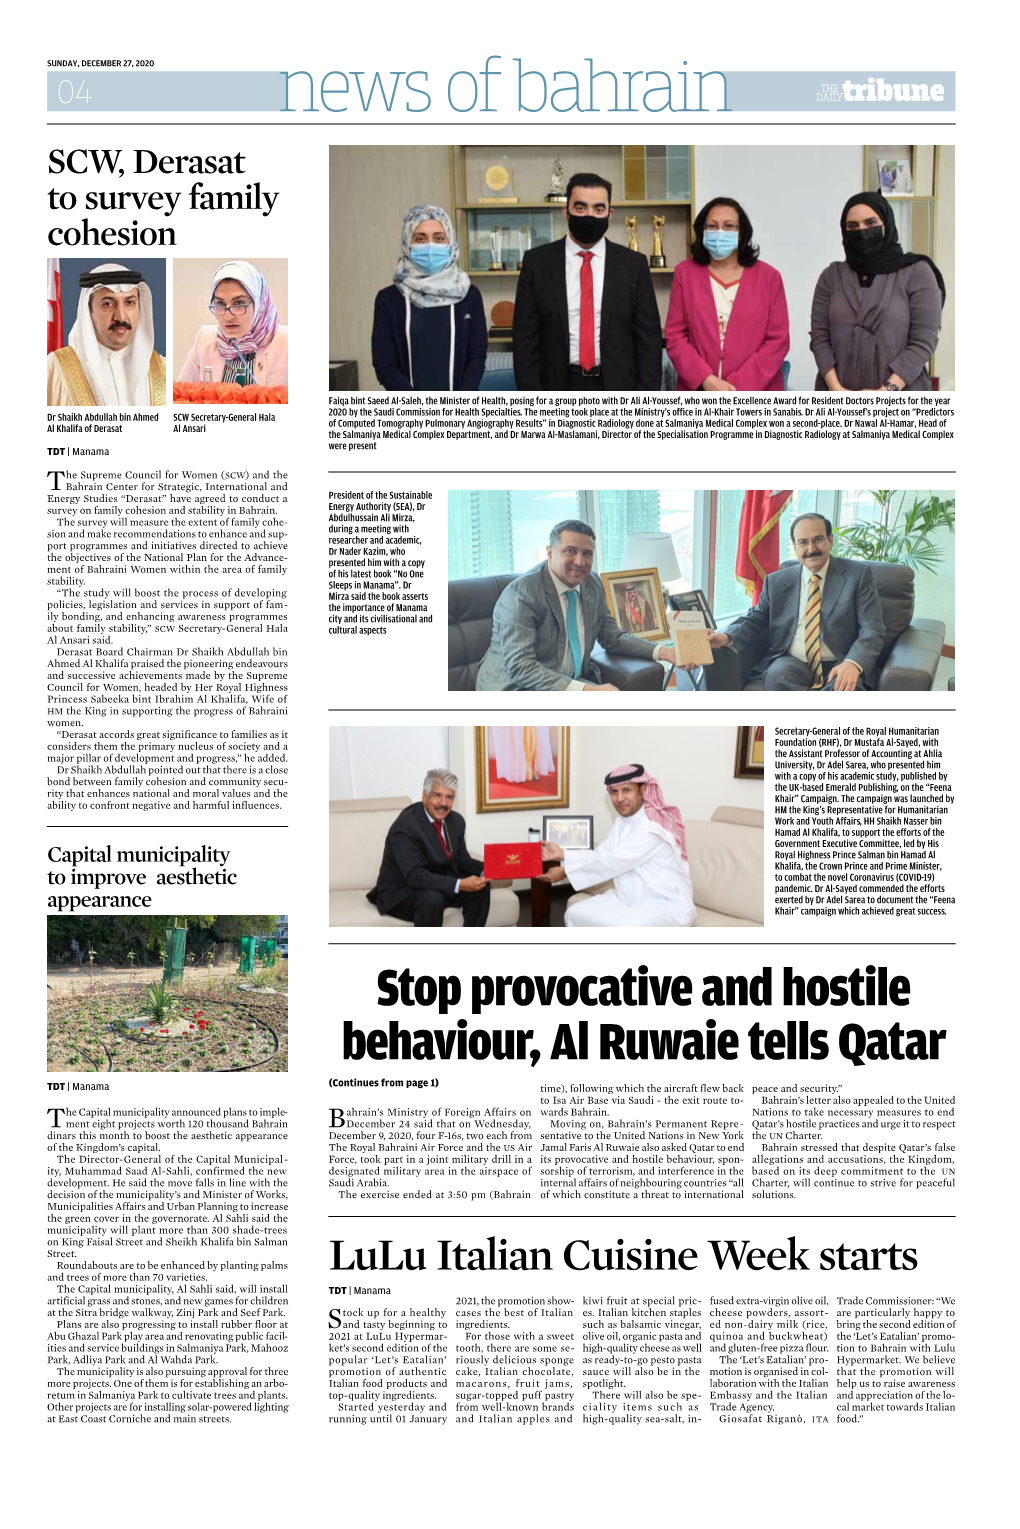 Stop Provocative and Hostile Behaviour, Al Ruwaie Tells Qatar